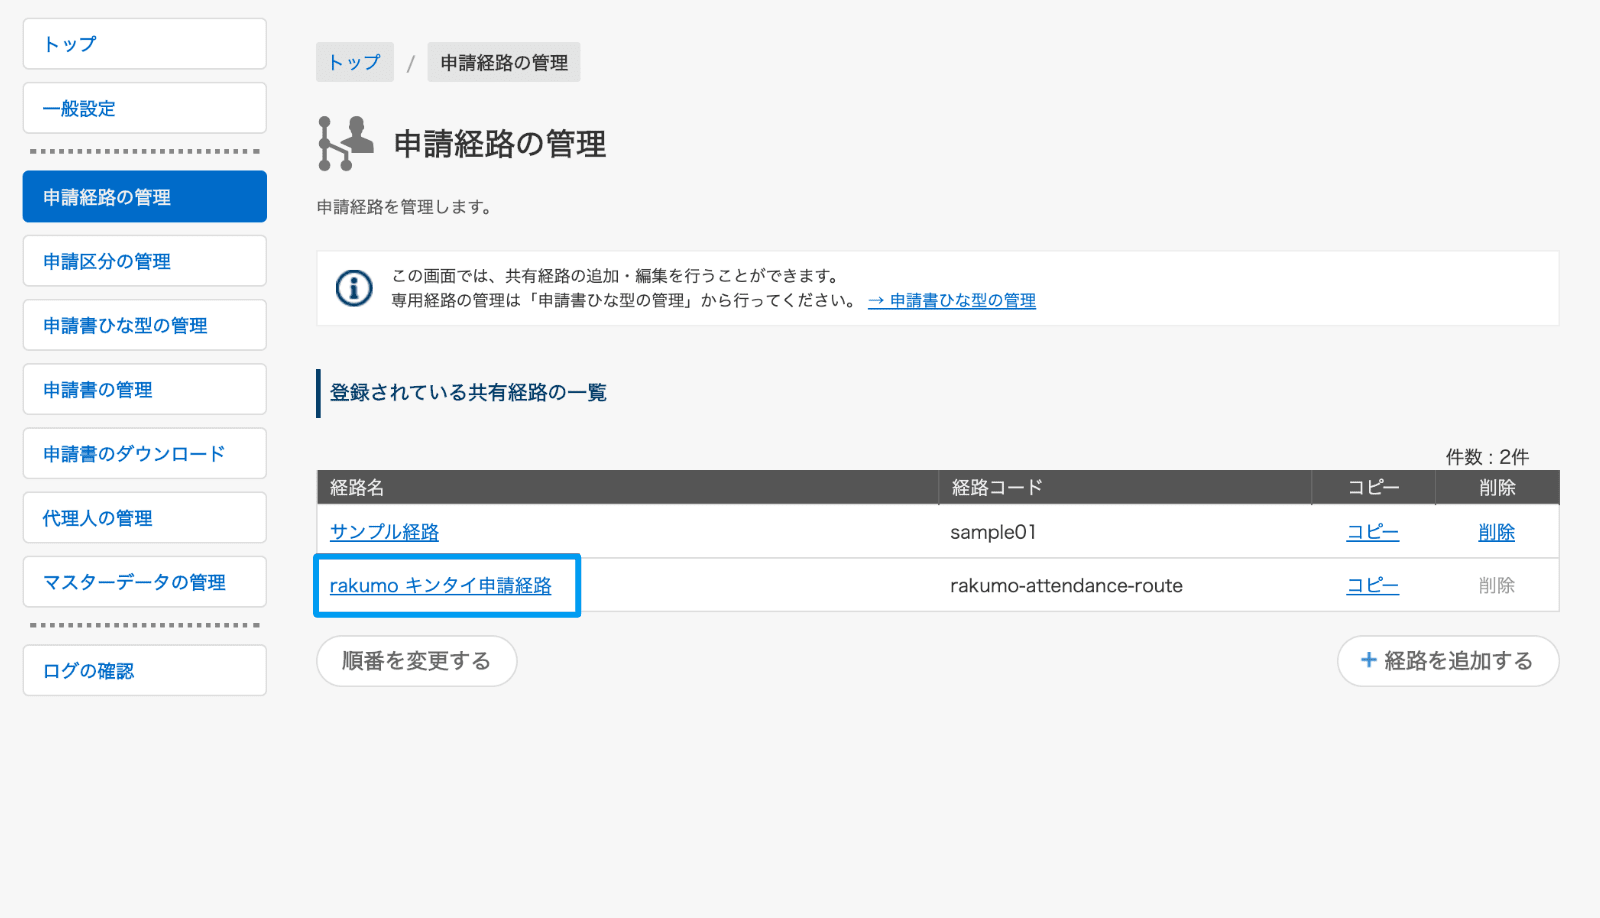 rakumo キンタイで使用する申請経路 ワークフロー運用管理画面 > 申請経路の管理 > 「rakumo キンタイ申請経路」